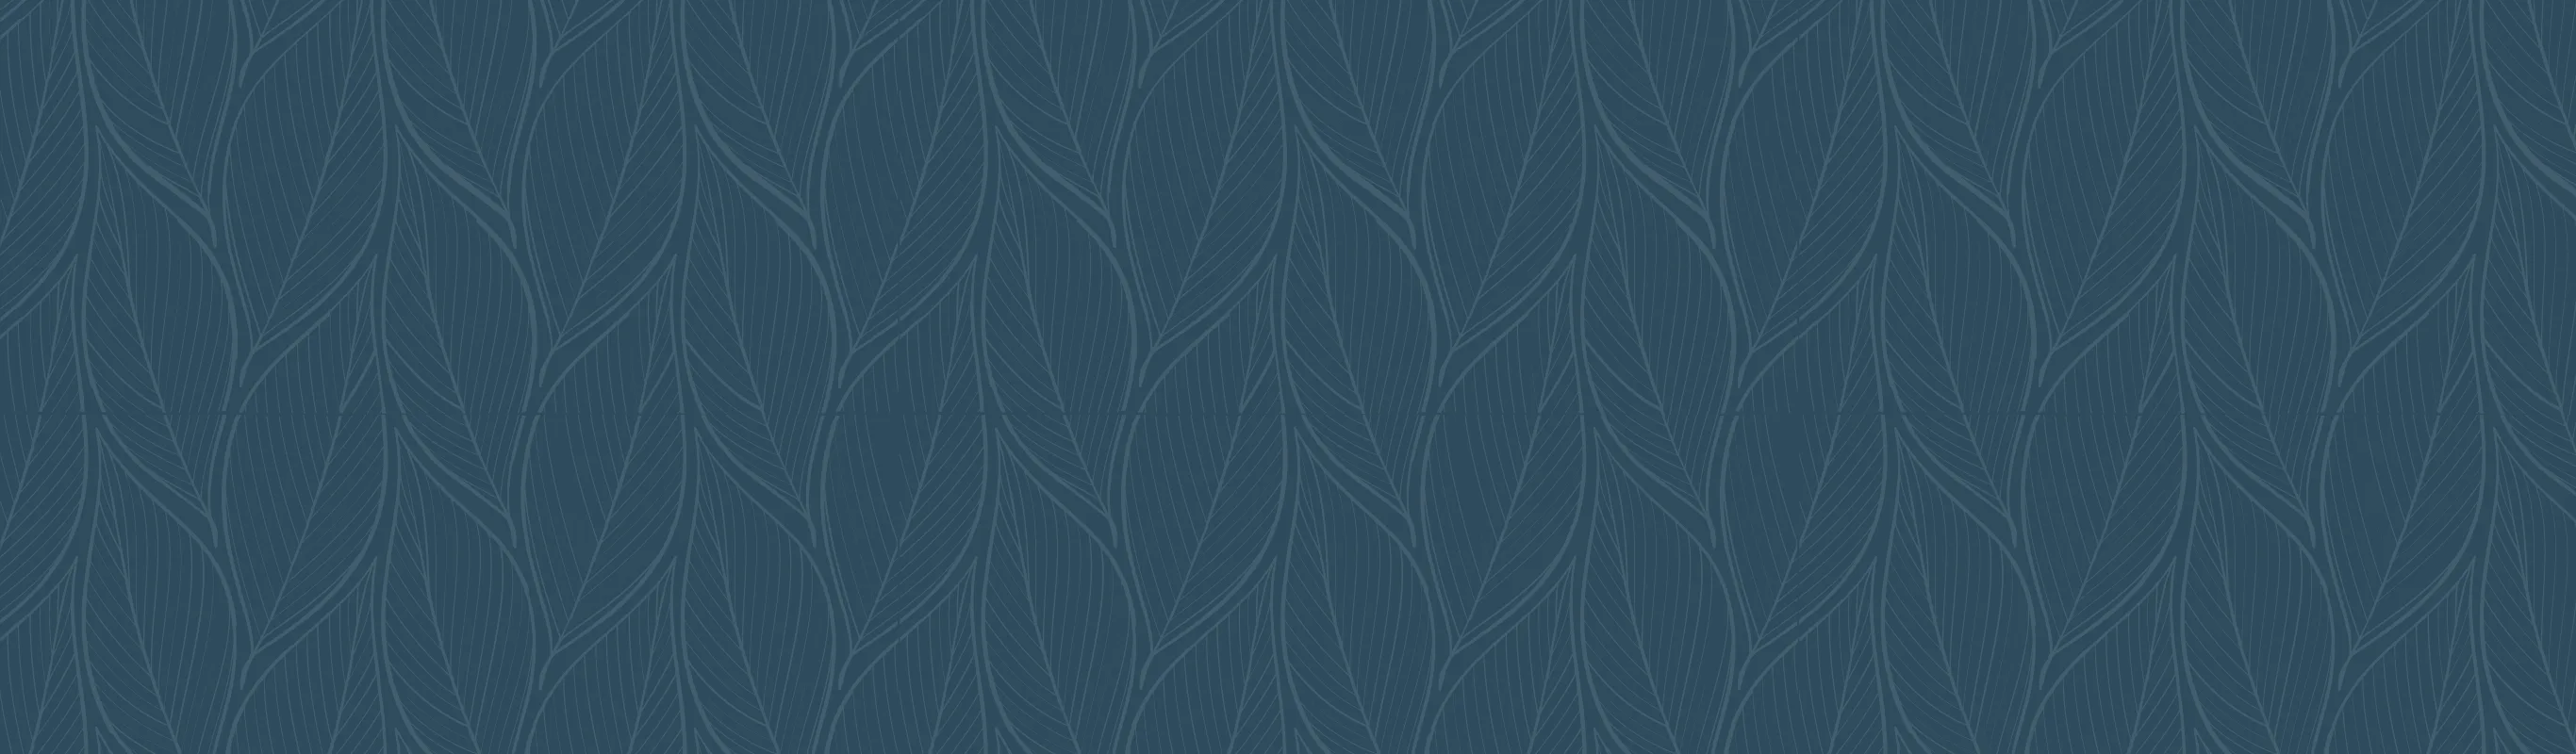 Leaf pattern on a navy blue background